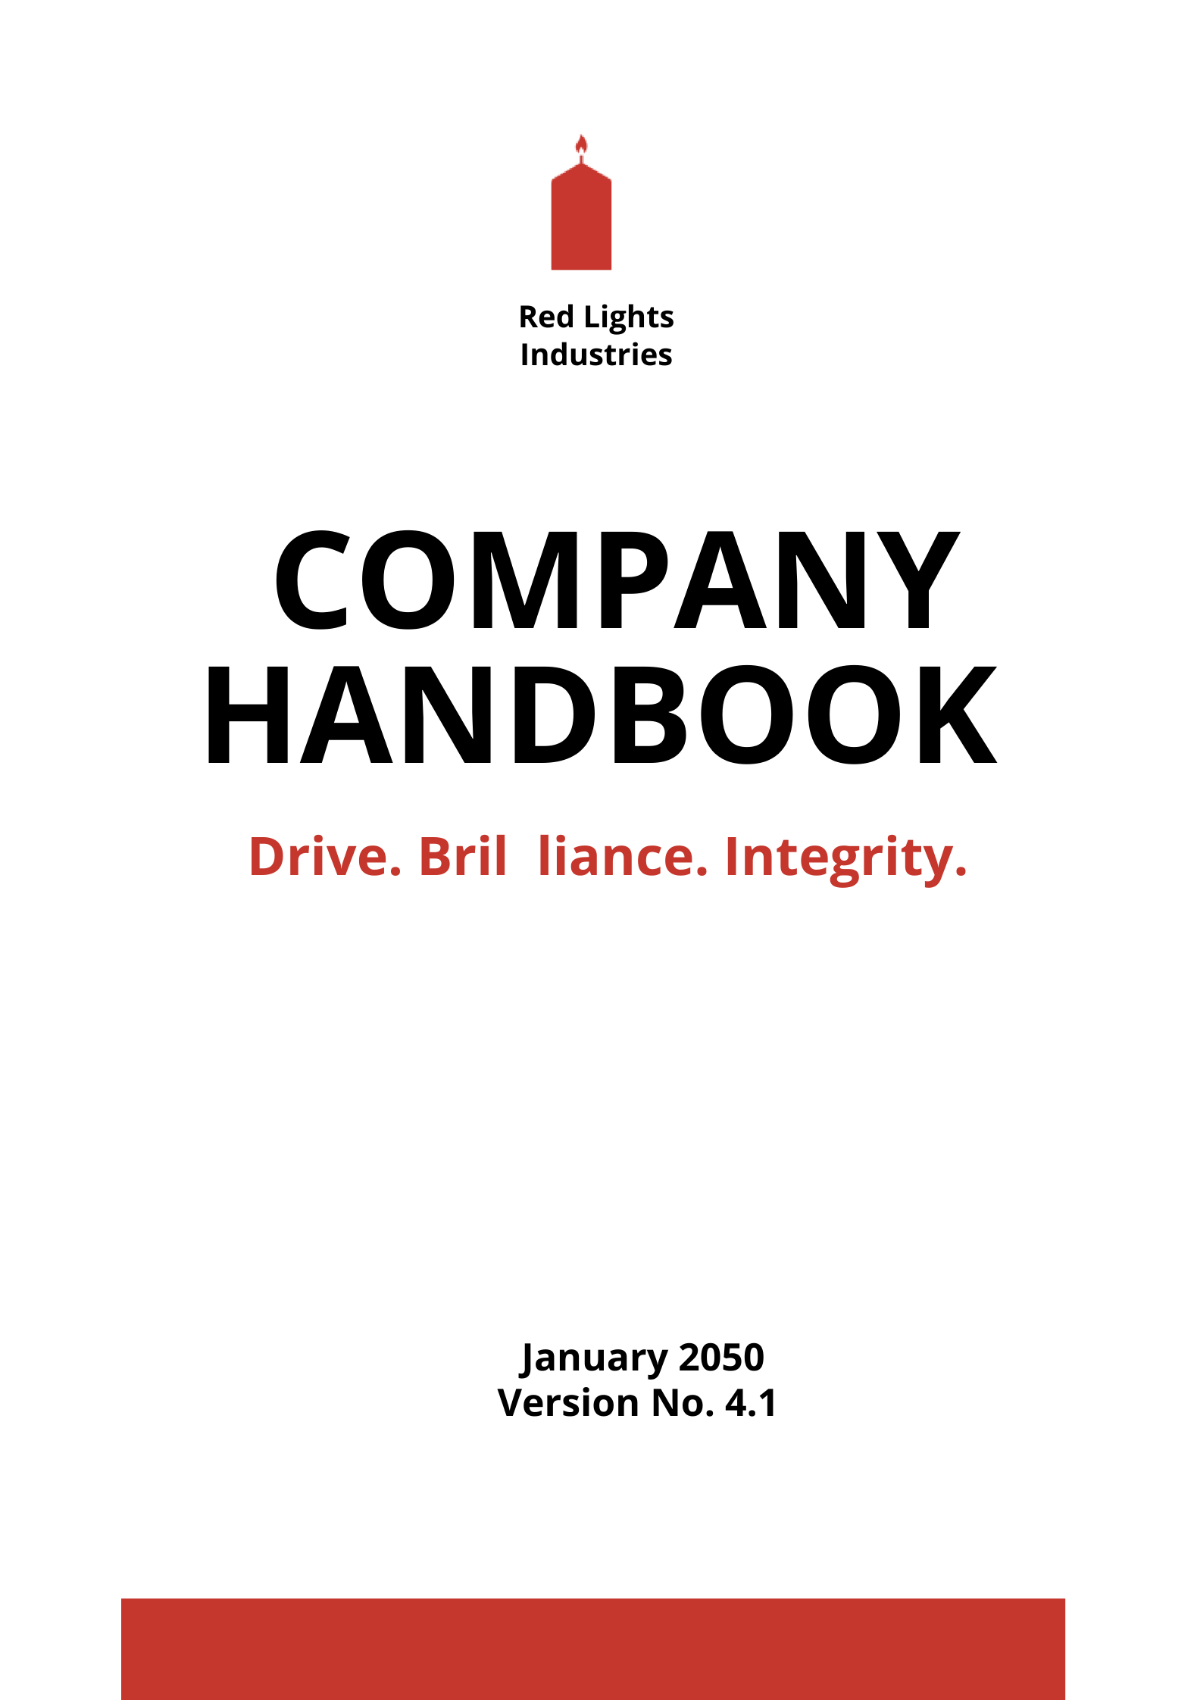 Company Handbook Template